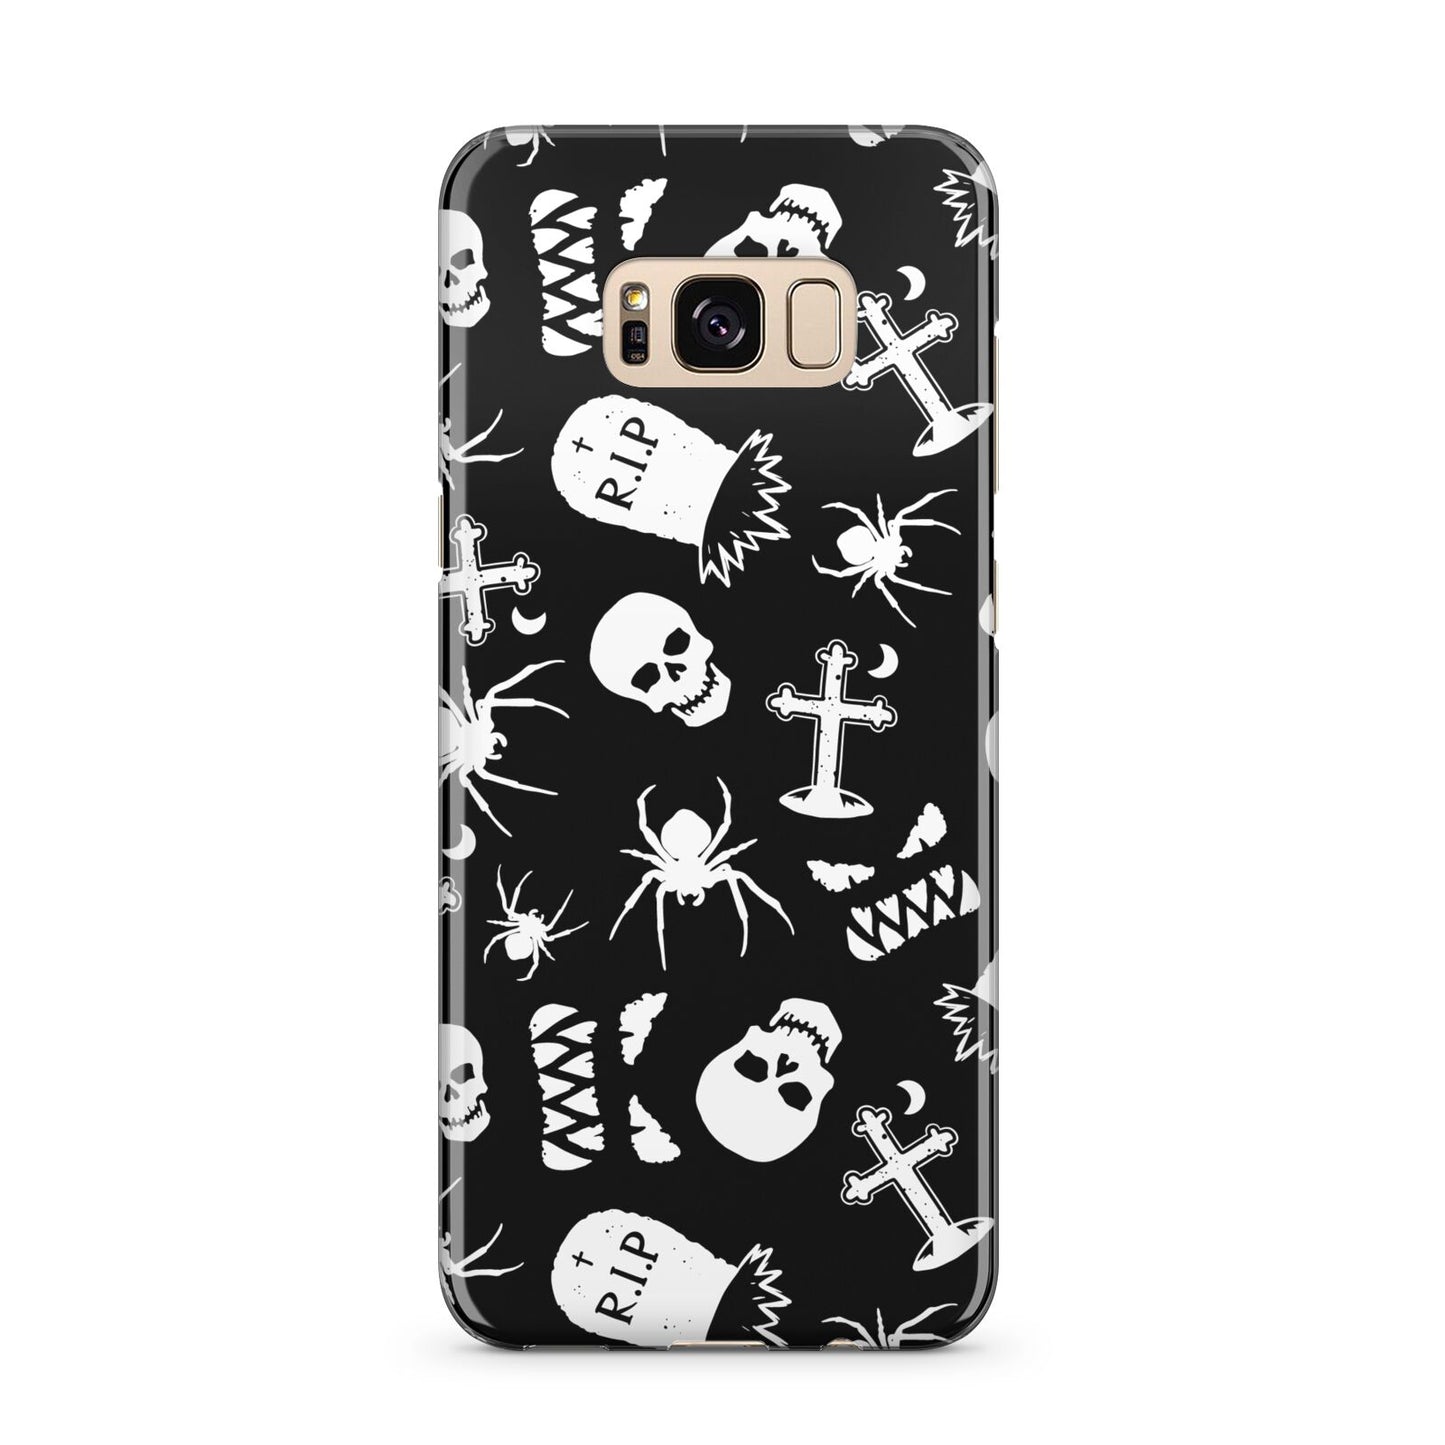 Spooky Illustrations Samsung Galaxy S8 Plus Case